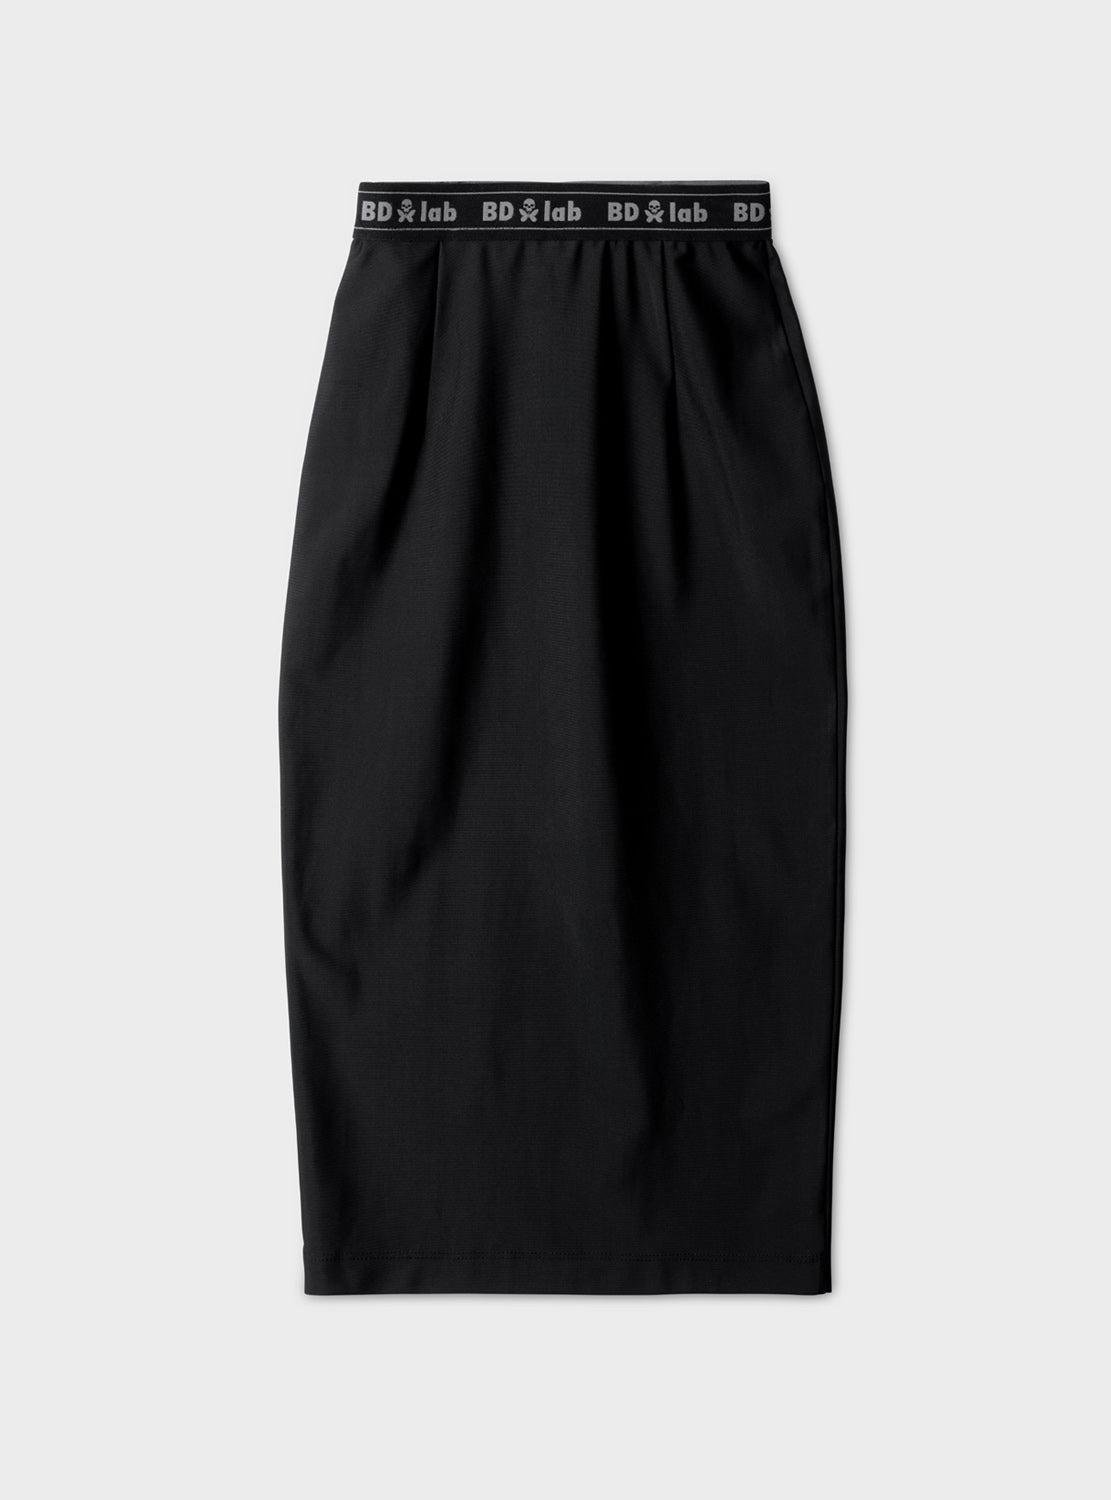 betty designs bdlab sportswear for women skirt